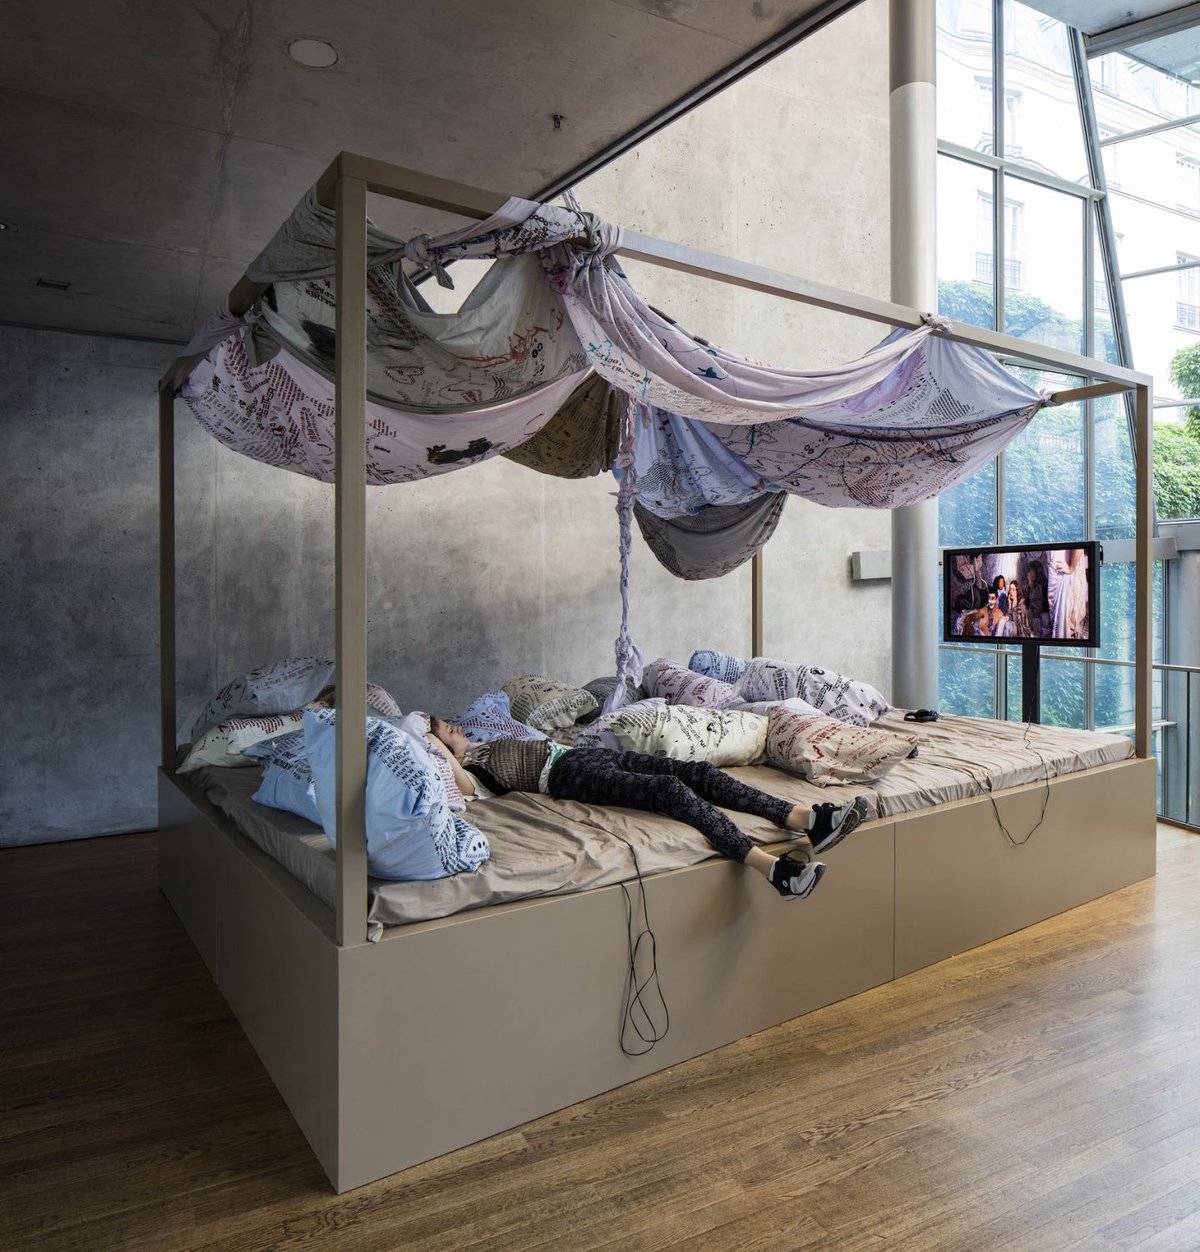 Lena Henke &amp; Marie Karlbergin bed with M/L Artspace, 2016Installation view9th Berlin Biennale, Berlin